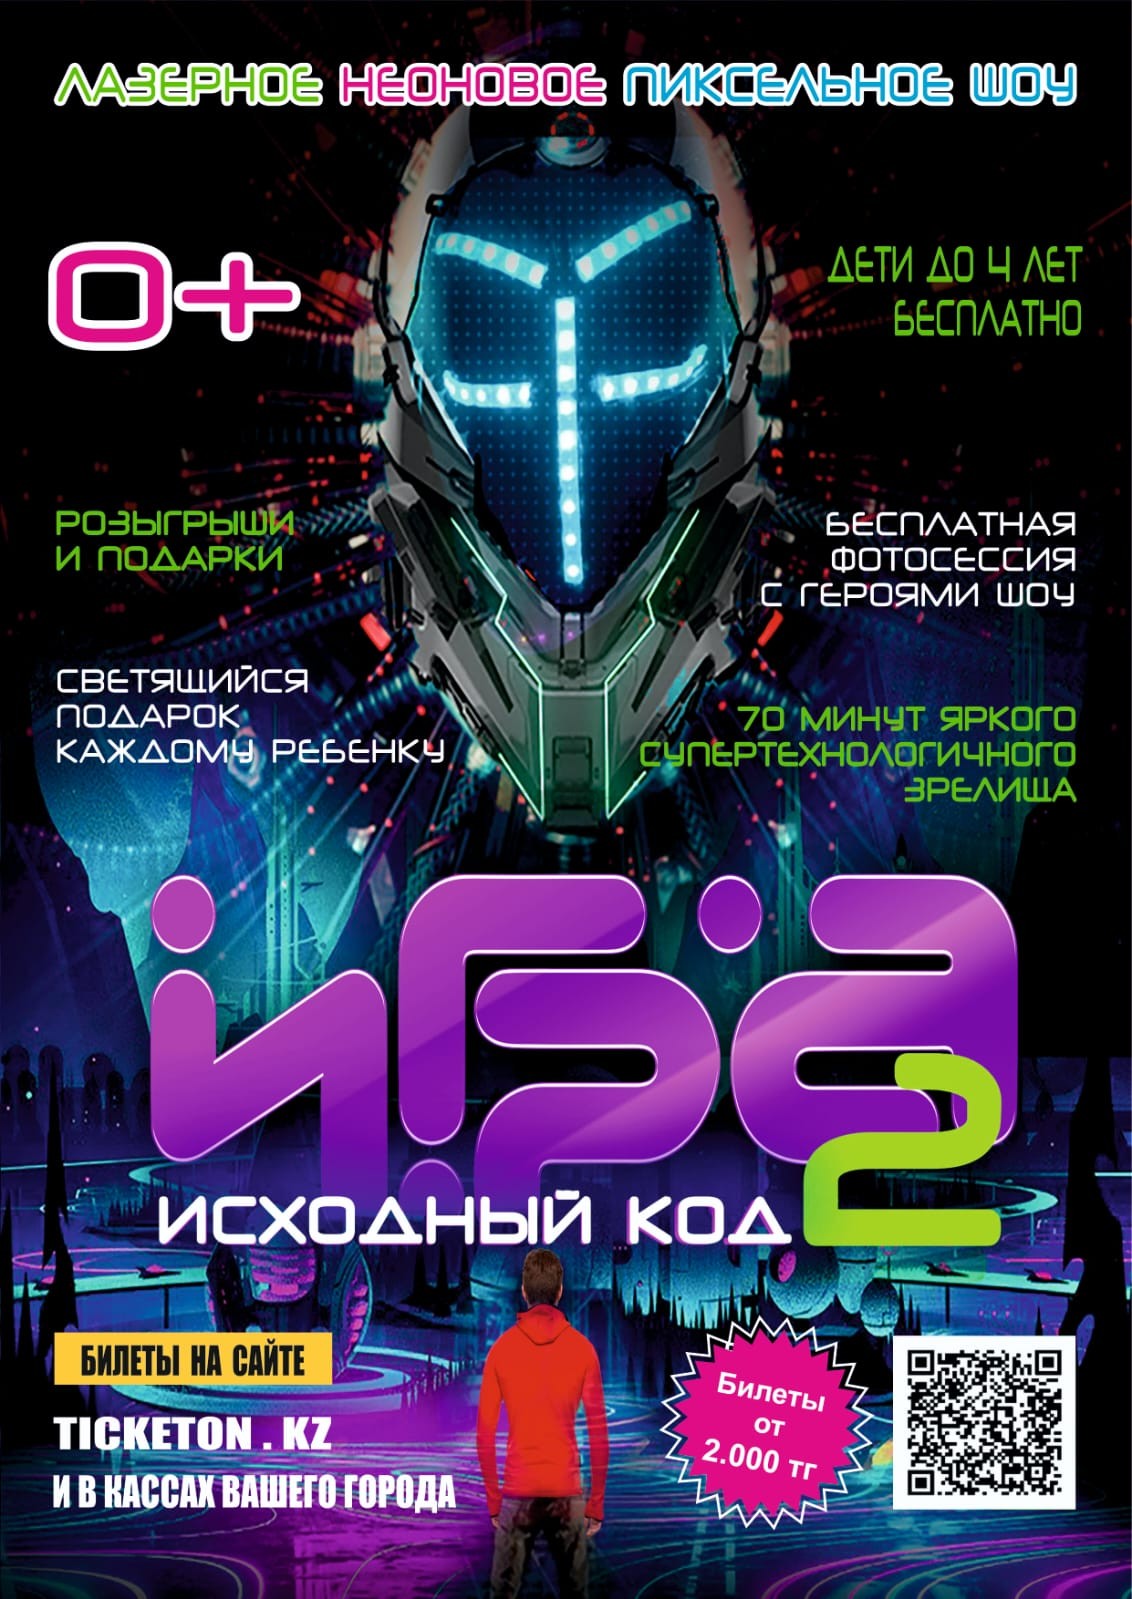 Laser neon show «Game 2» in Petropavlovsk